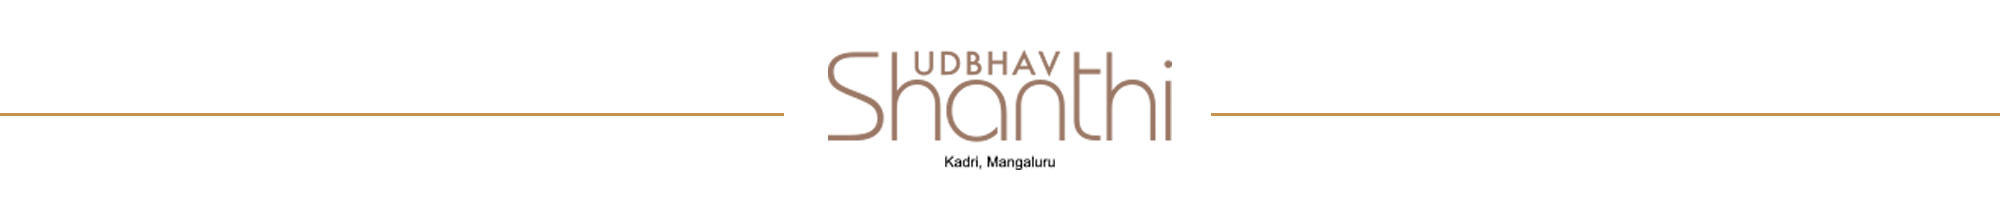 udbhav-shanthi-logo-w-line